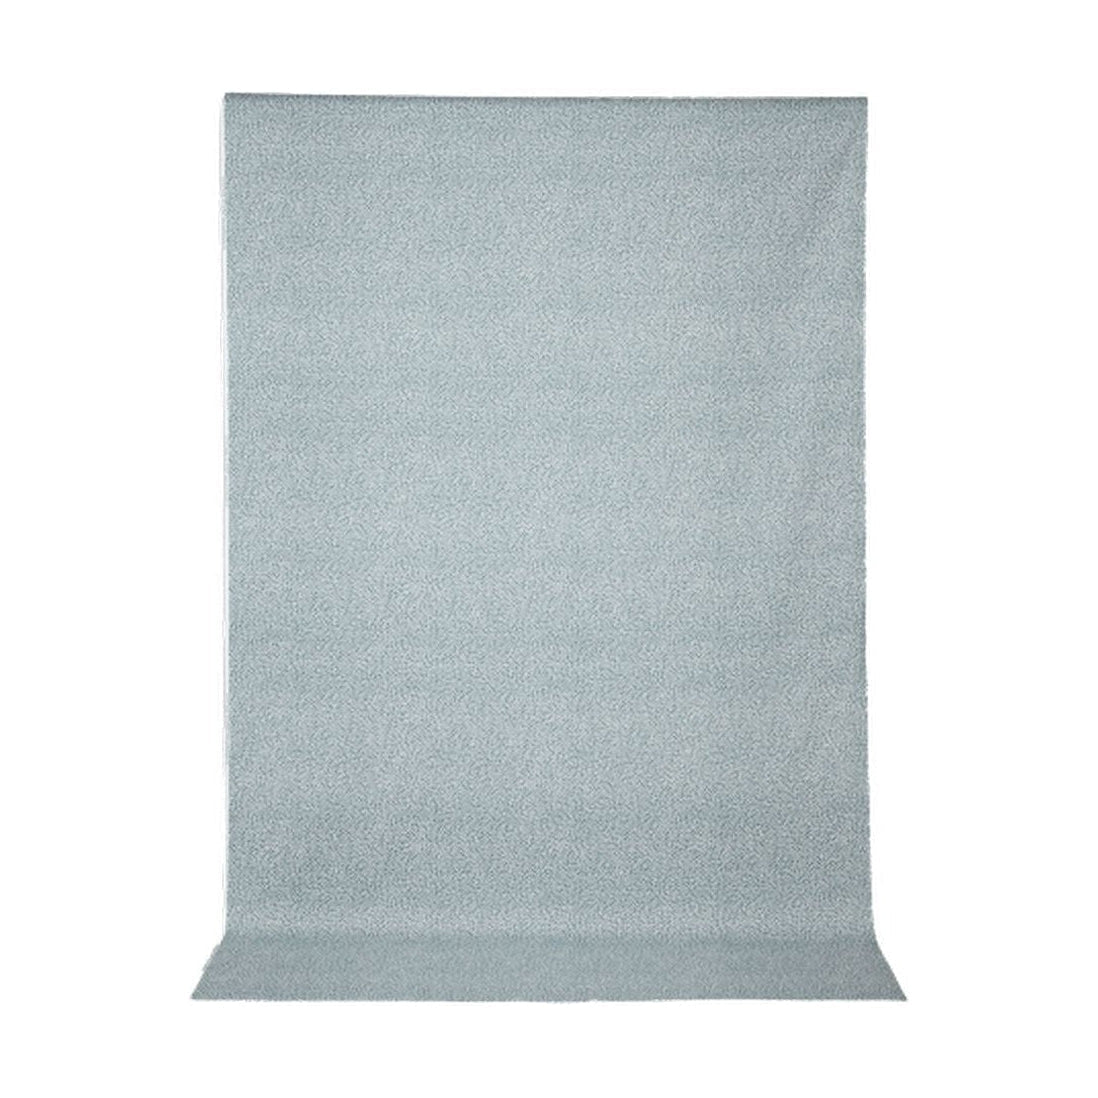 Spira Dotte Fabric Width 150 Cm (Price Per Meter), Smoked Blue